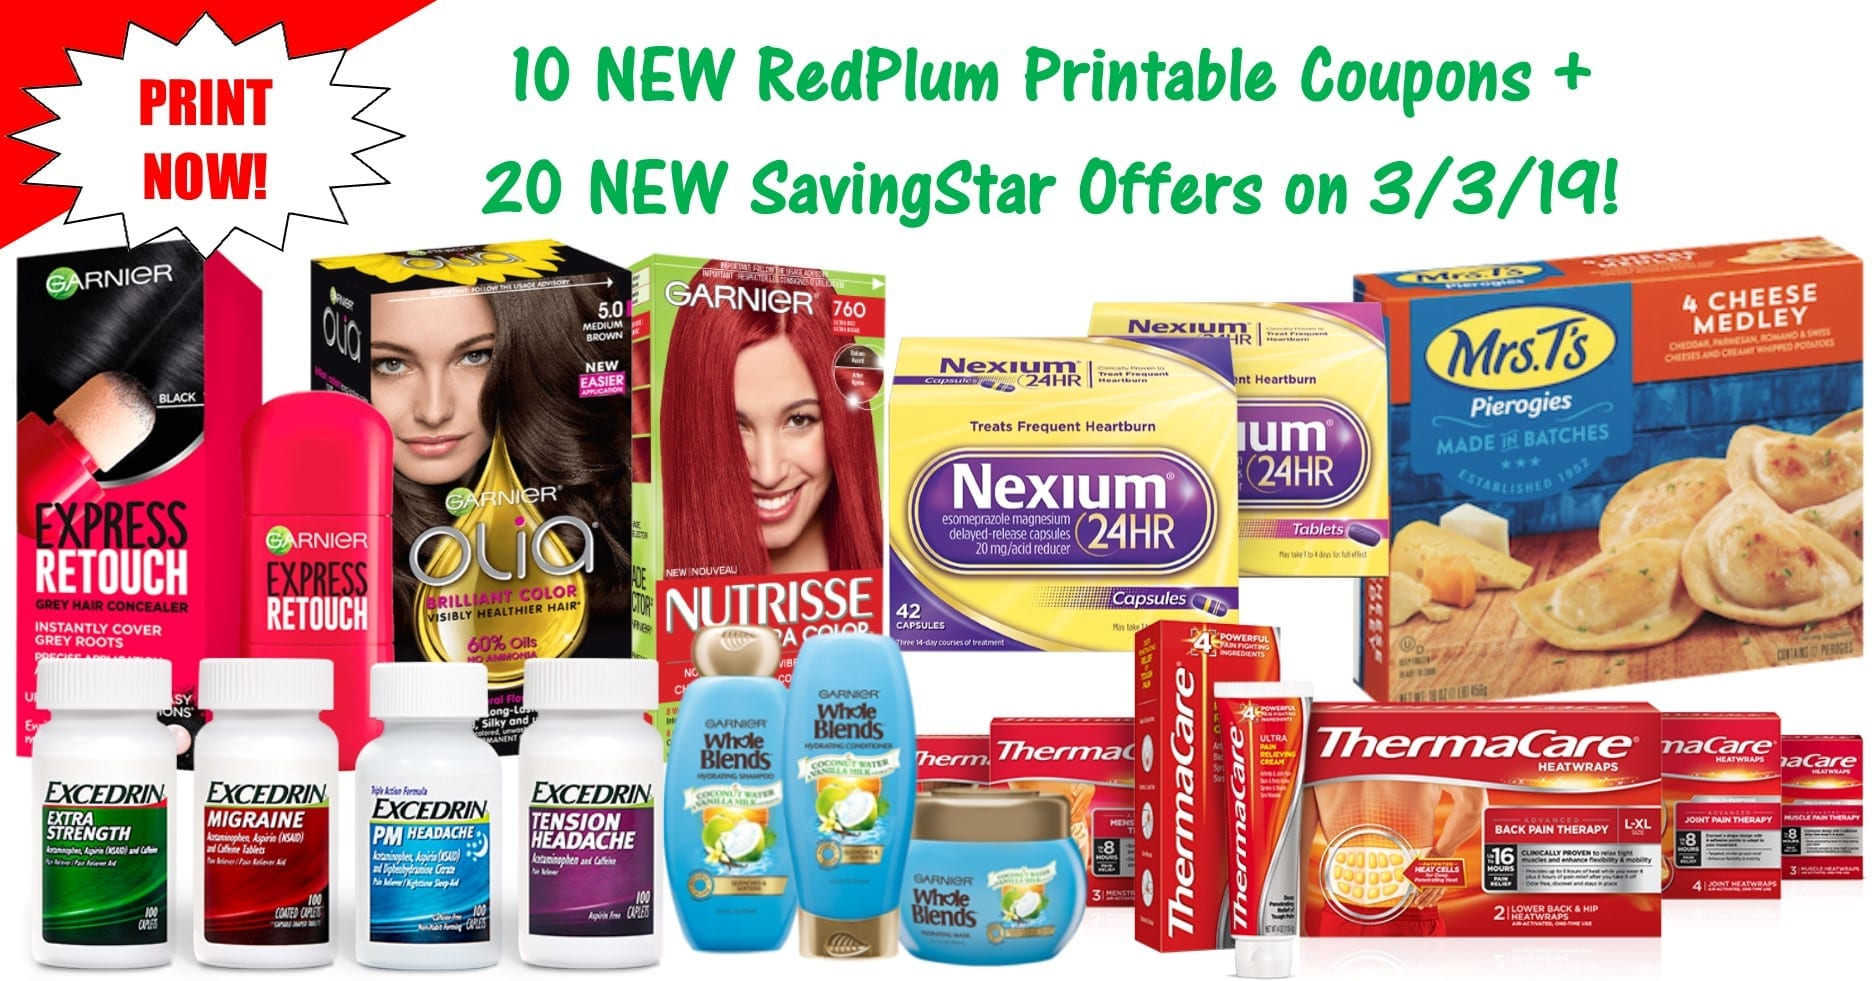 10 NEW RedPlum Printable Coupons 20 NEW SavingStar Offers 